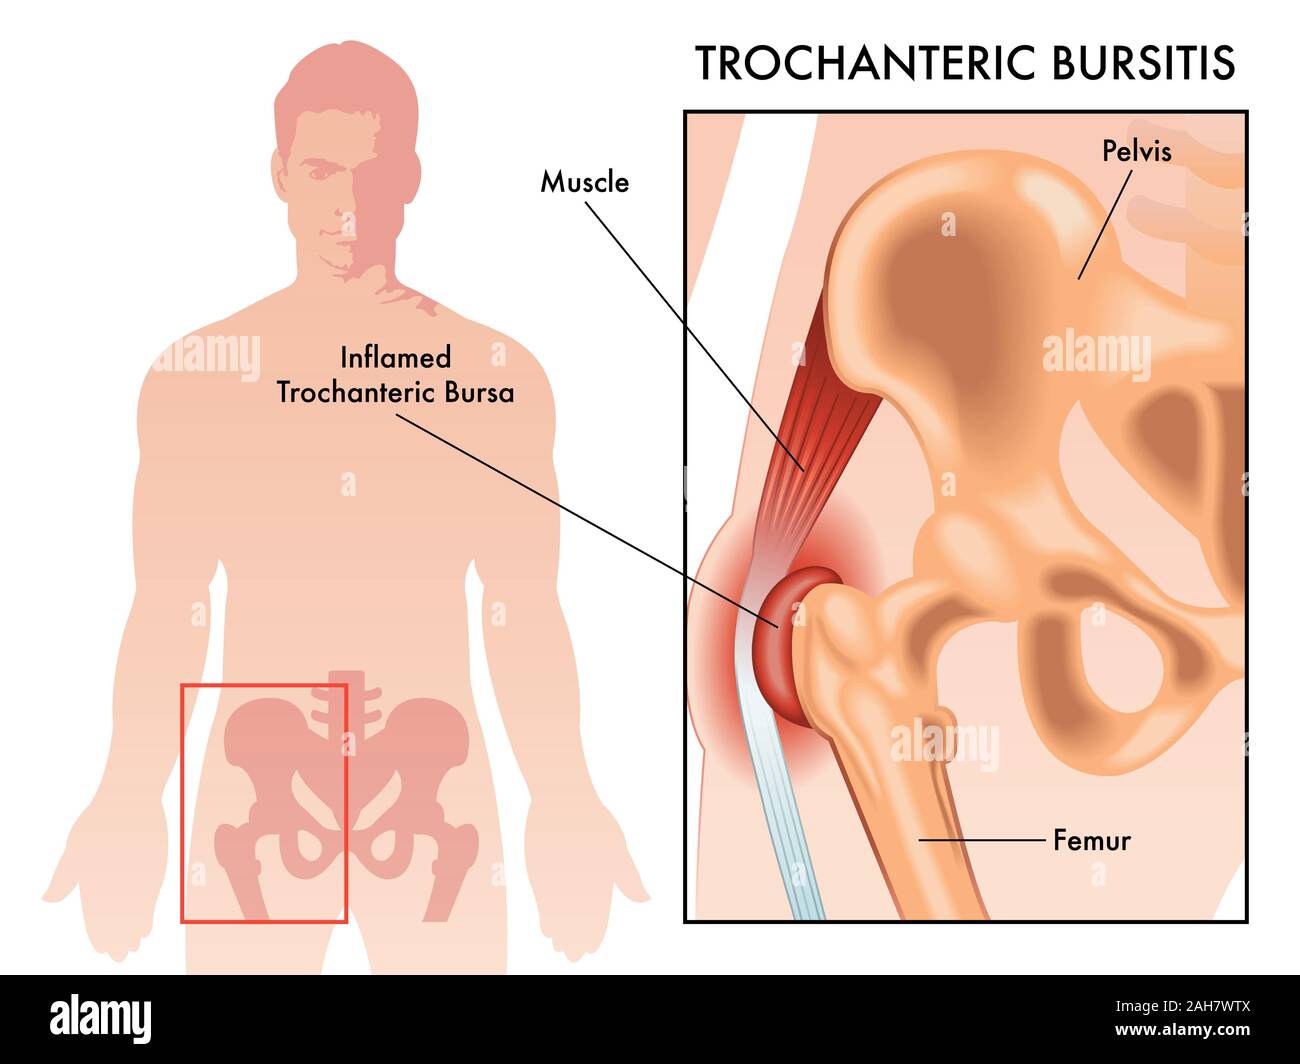 Ilustración médica mostrando trochanteric bursa o trochanteric bursitis en la cadera humana masculina de diagrama. Foto de stock